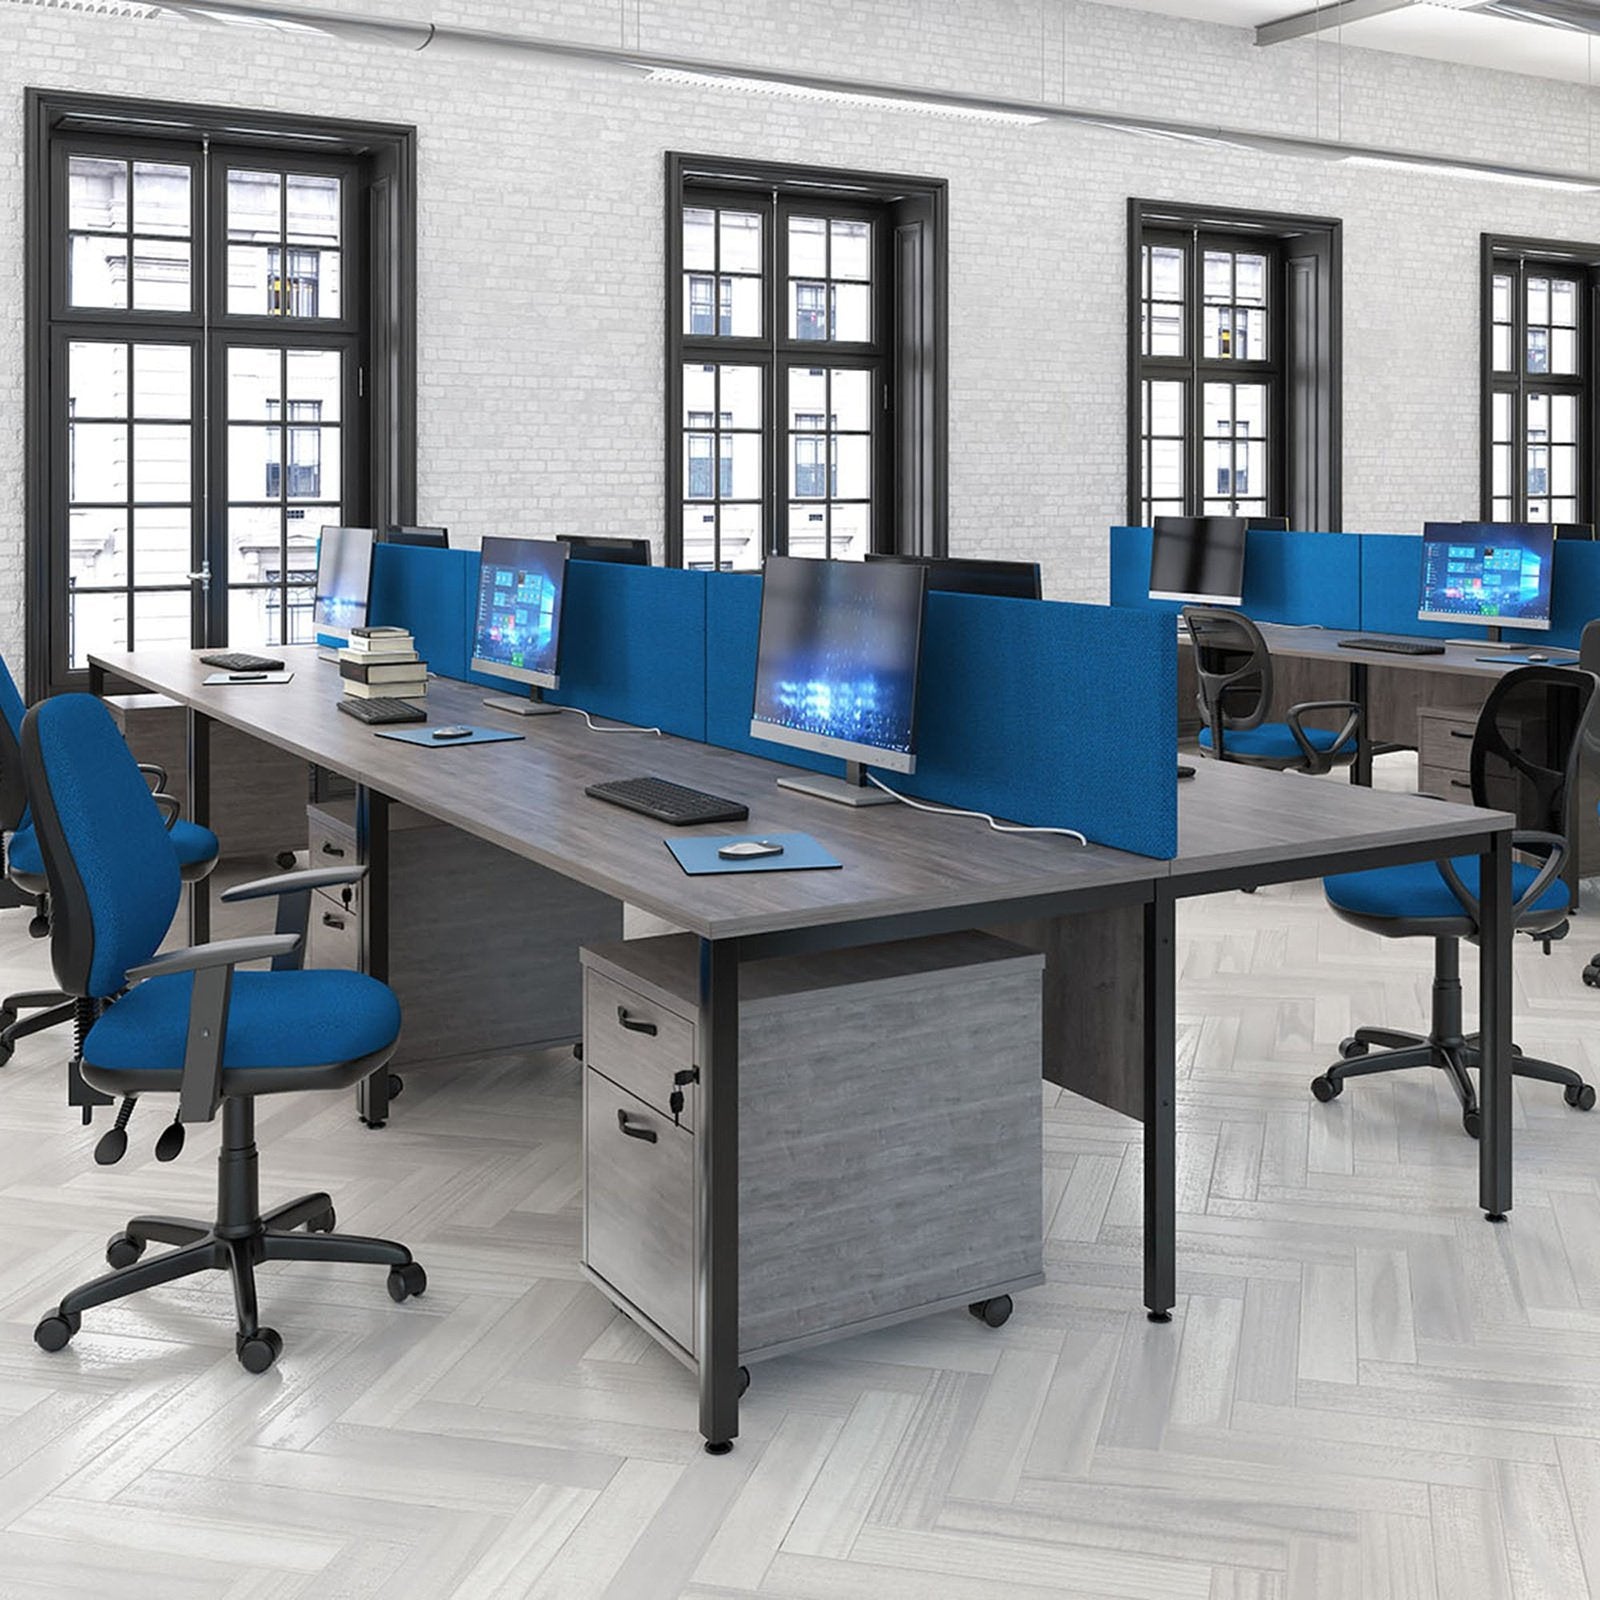 Maestro 25 bench leg straight desk 800 deep - Office Products Online